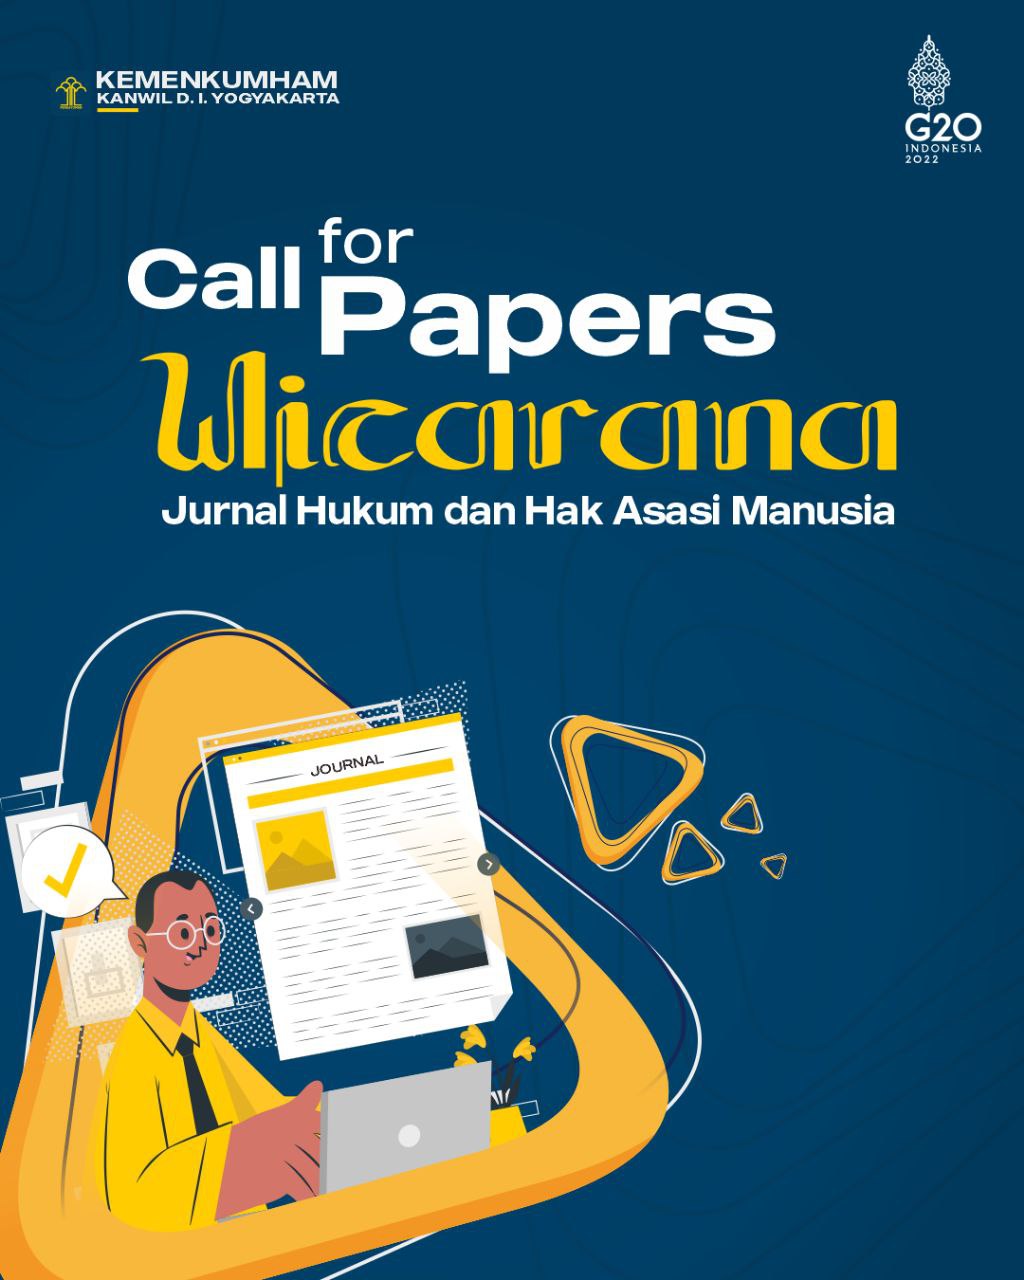 Call for Papers Jurnal Wicarana Vol. 1, No. 2, September 2022